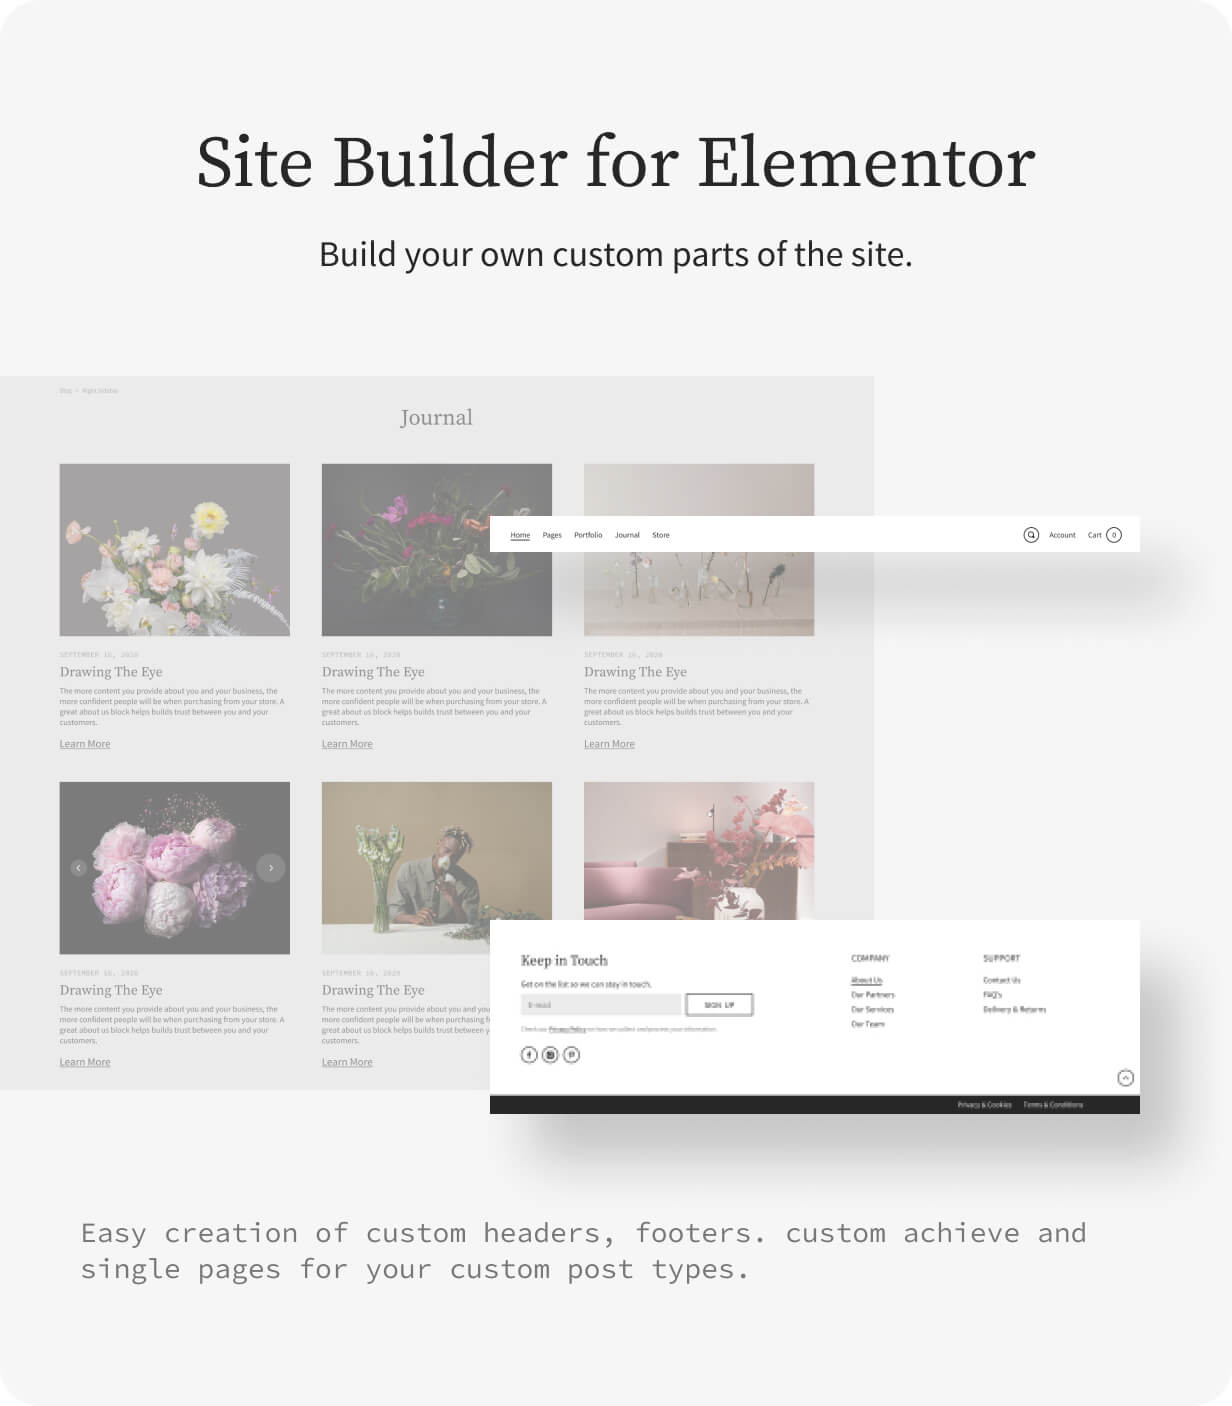 Site builder for elementor block